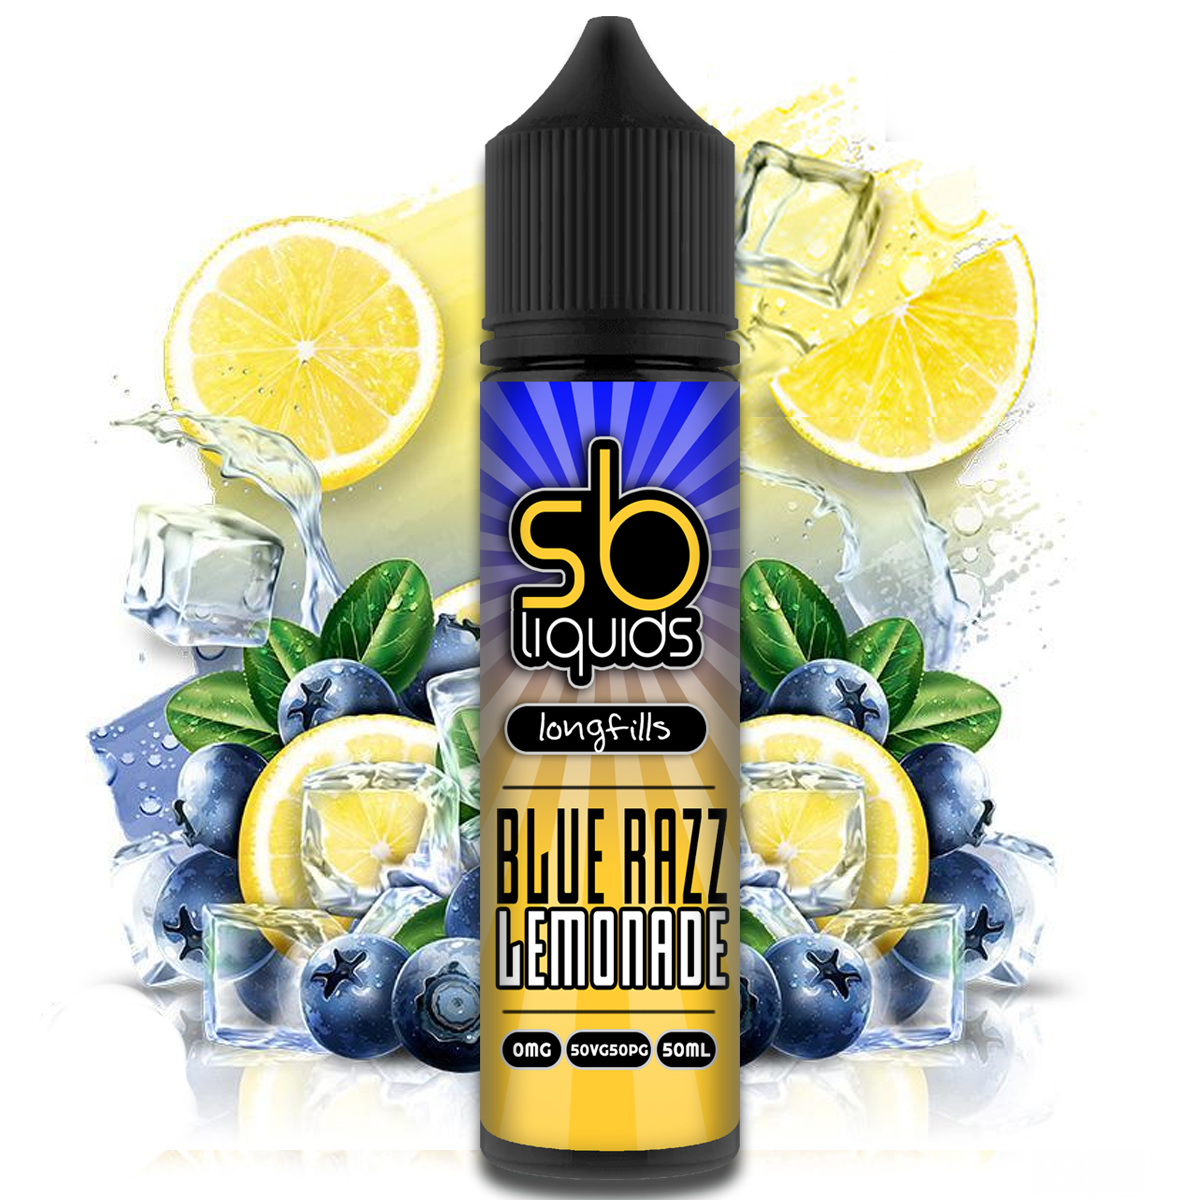 SB Liquids - Blue Razz Lemonade 50 ml riempimento lungo